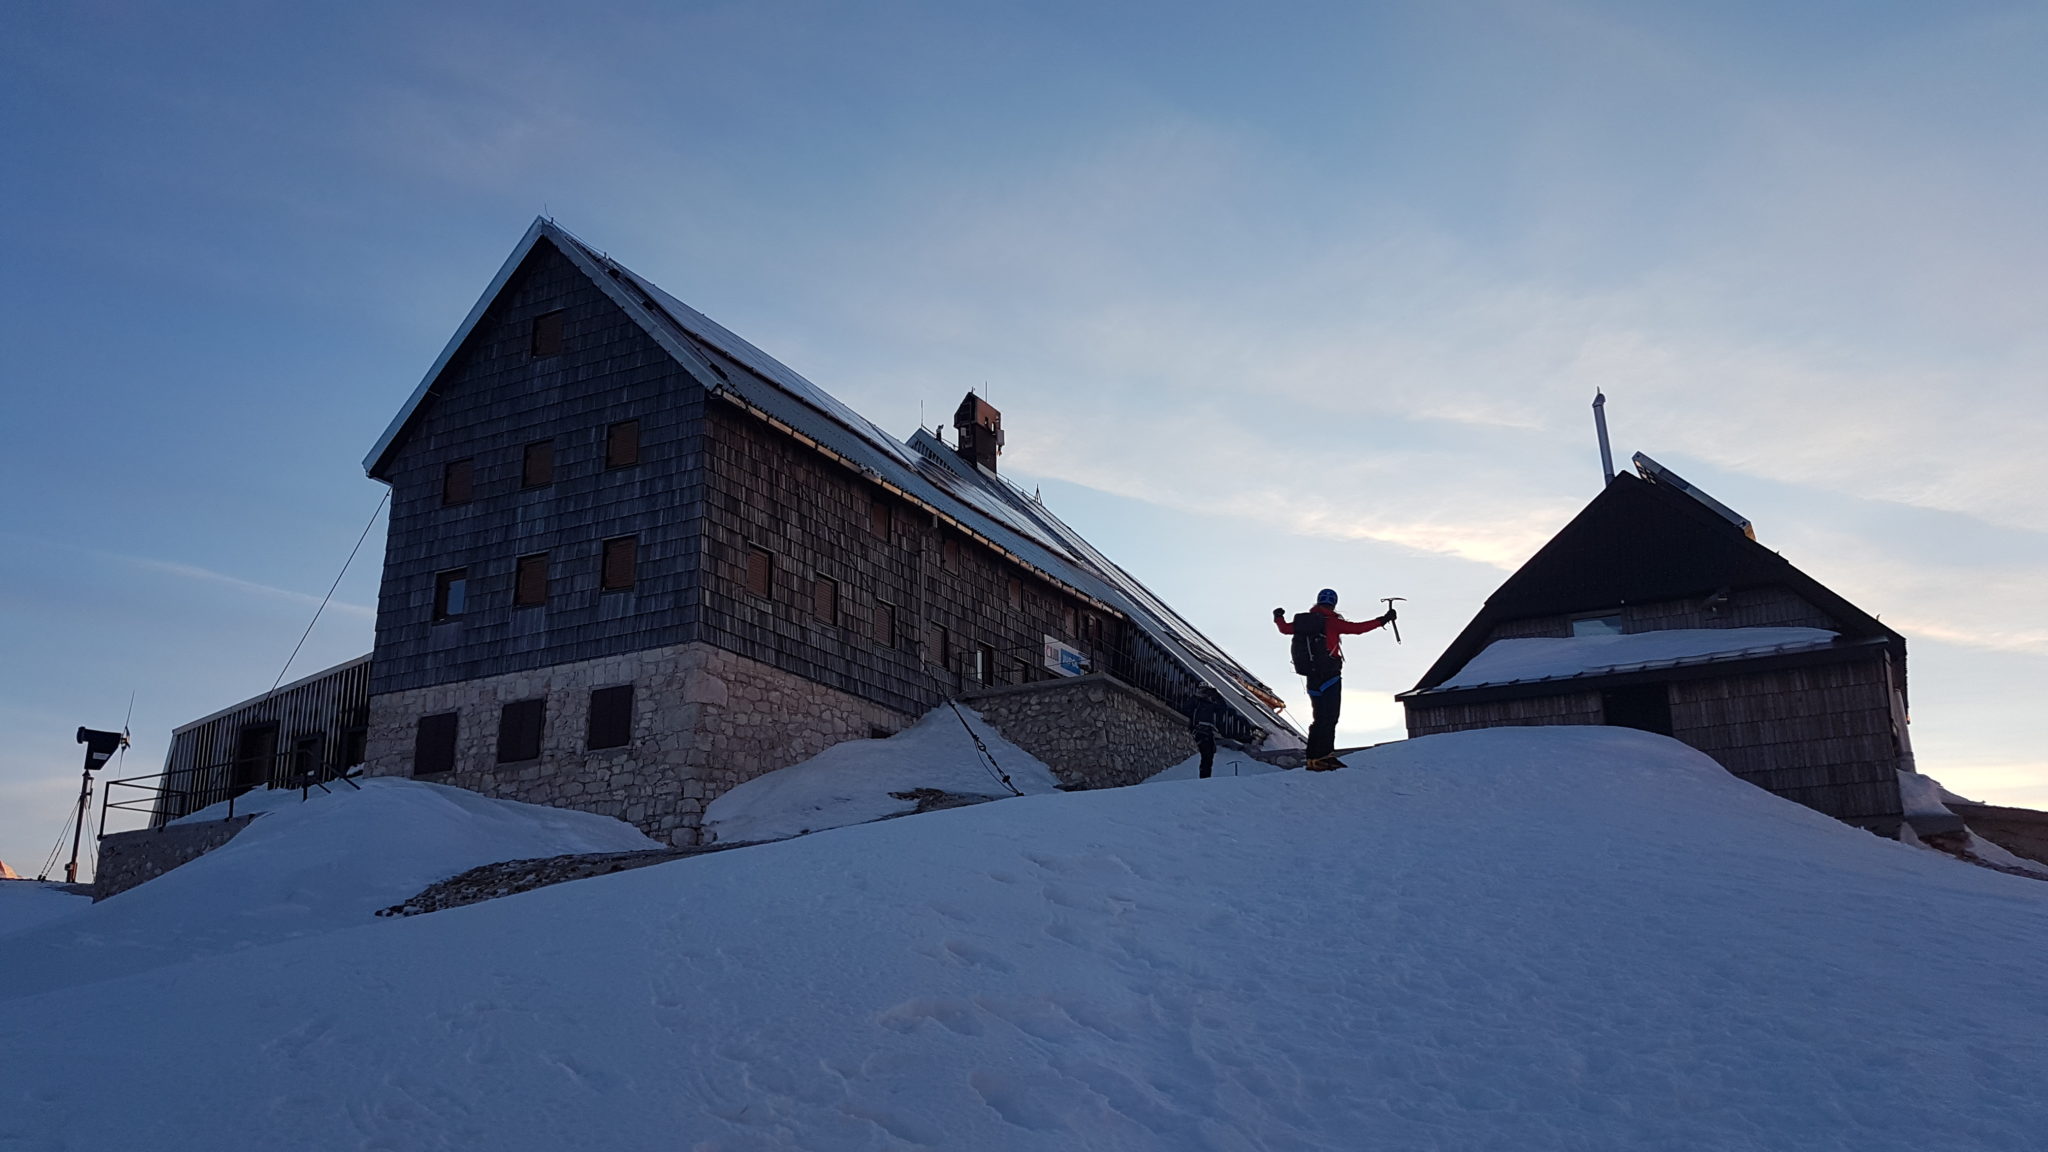 The Kredarica Hut in winter